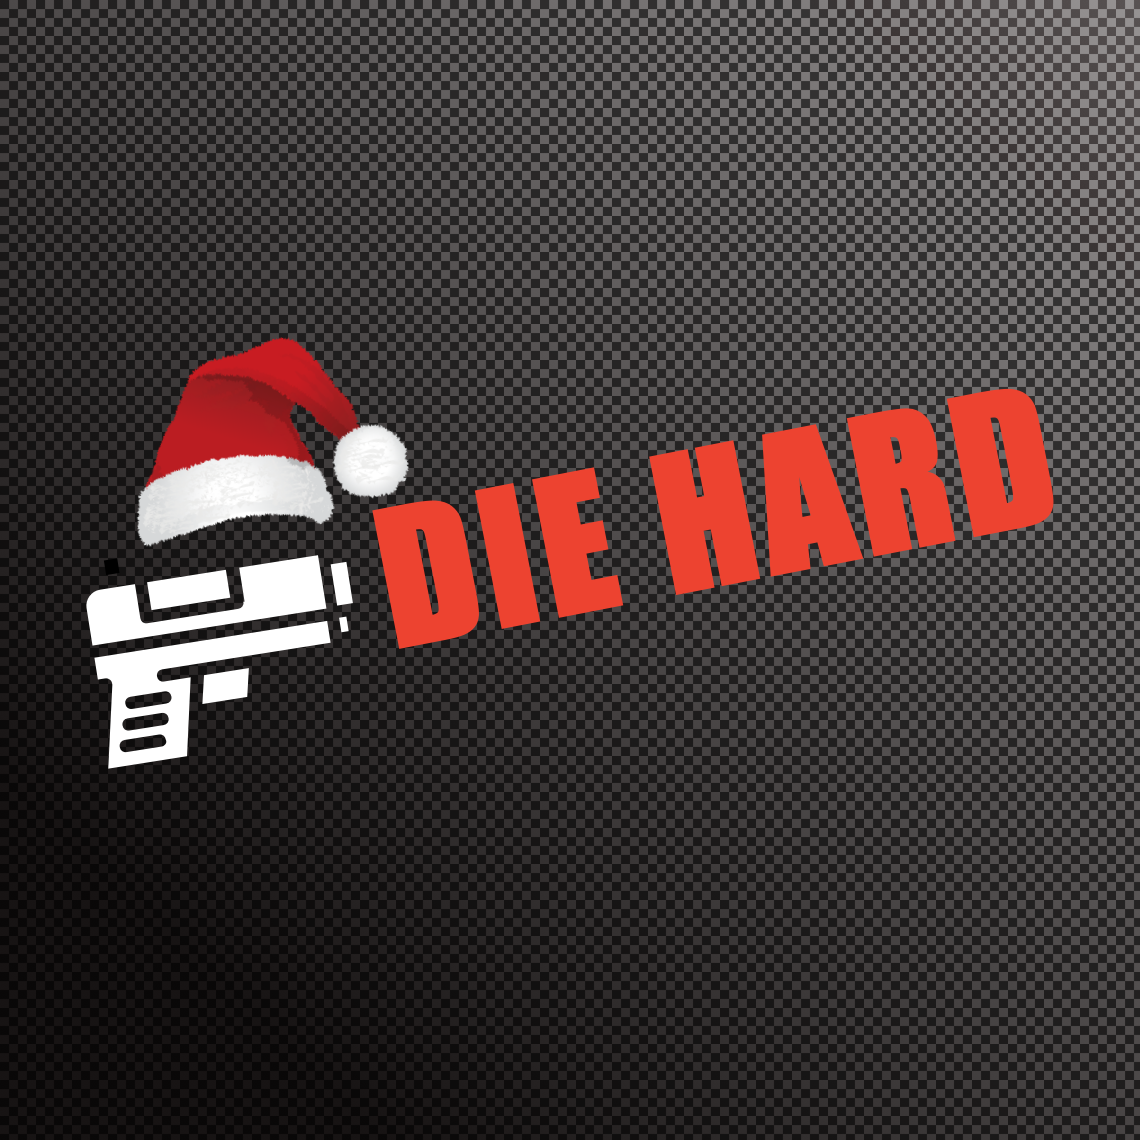 WATCH Die Hard here - 5 websites for INSTANT John McClane!